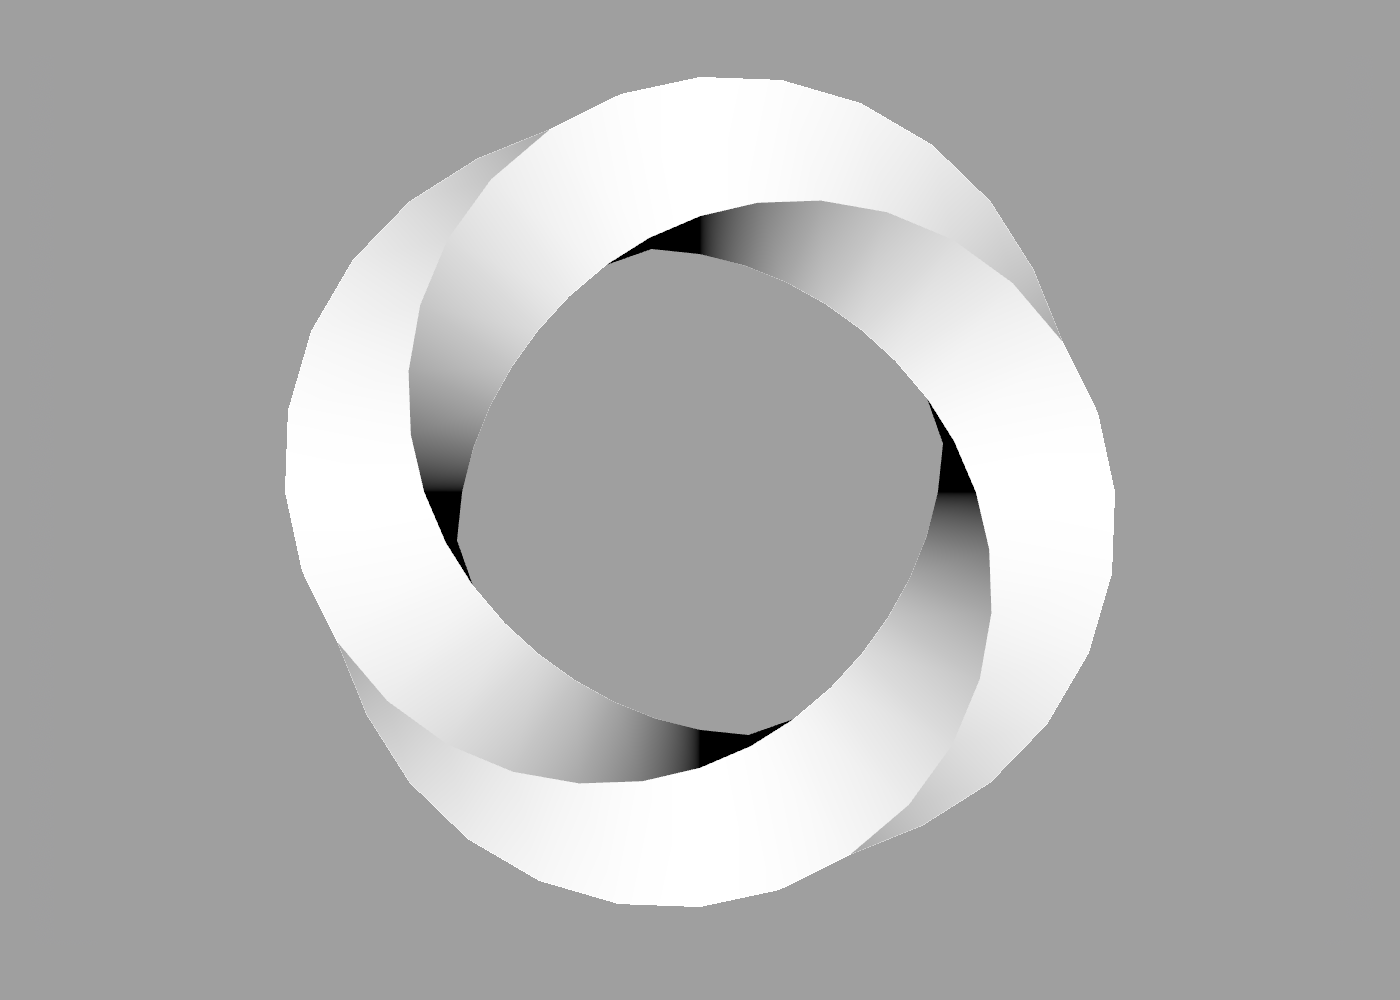 Twisted circle